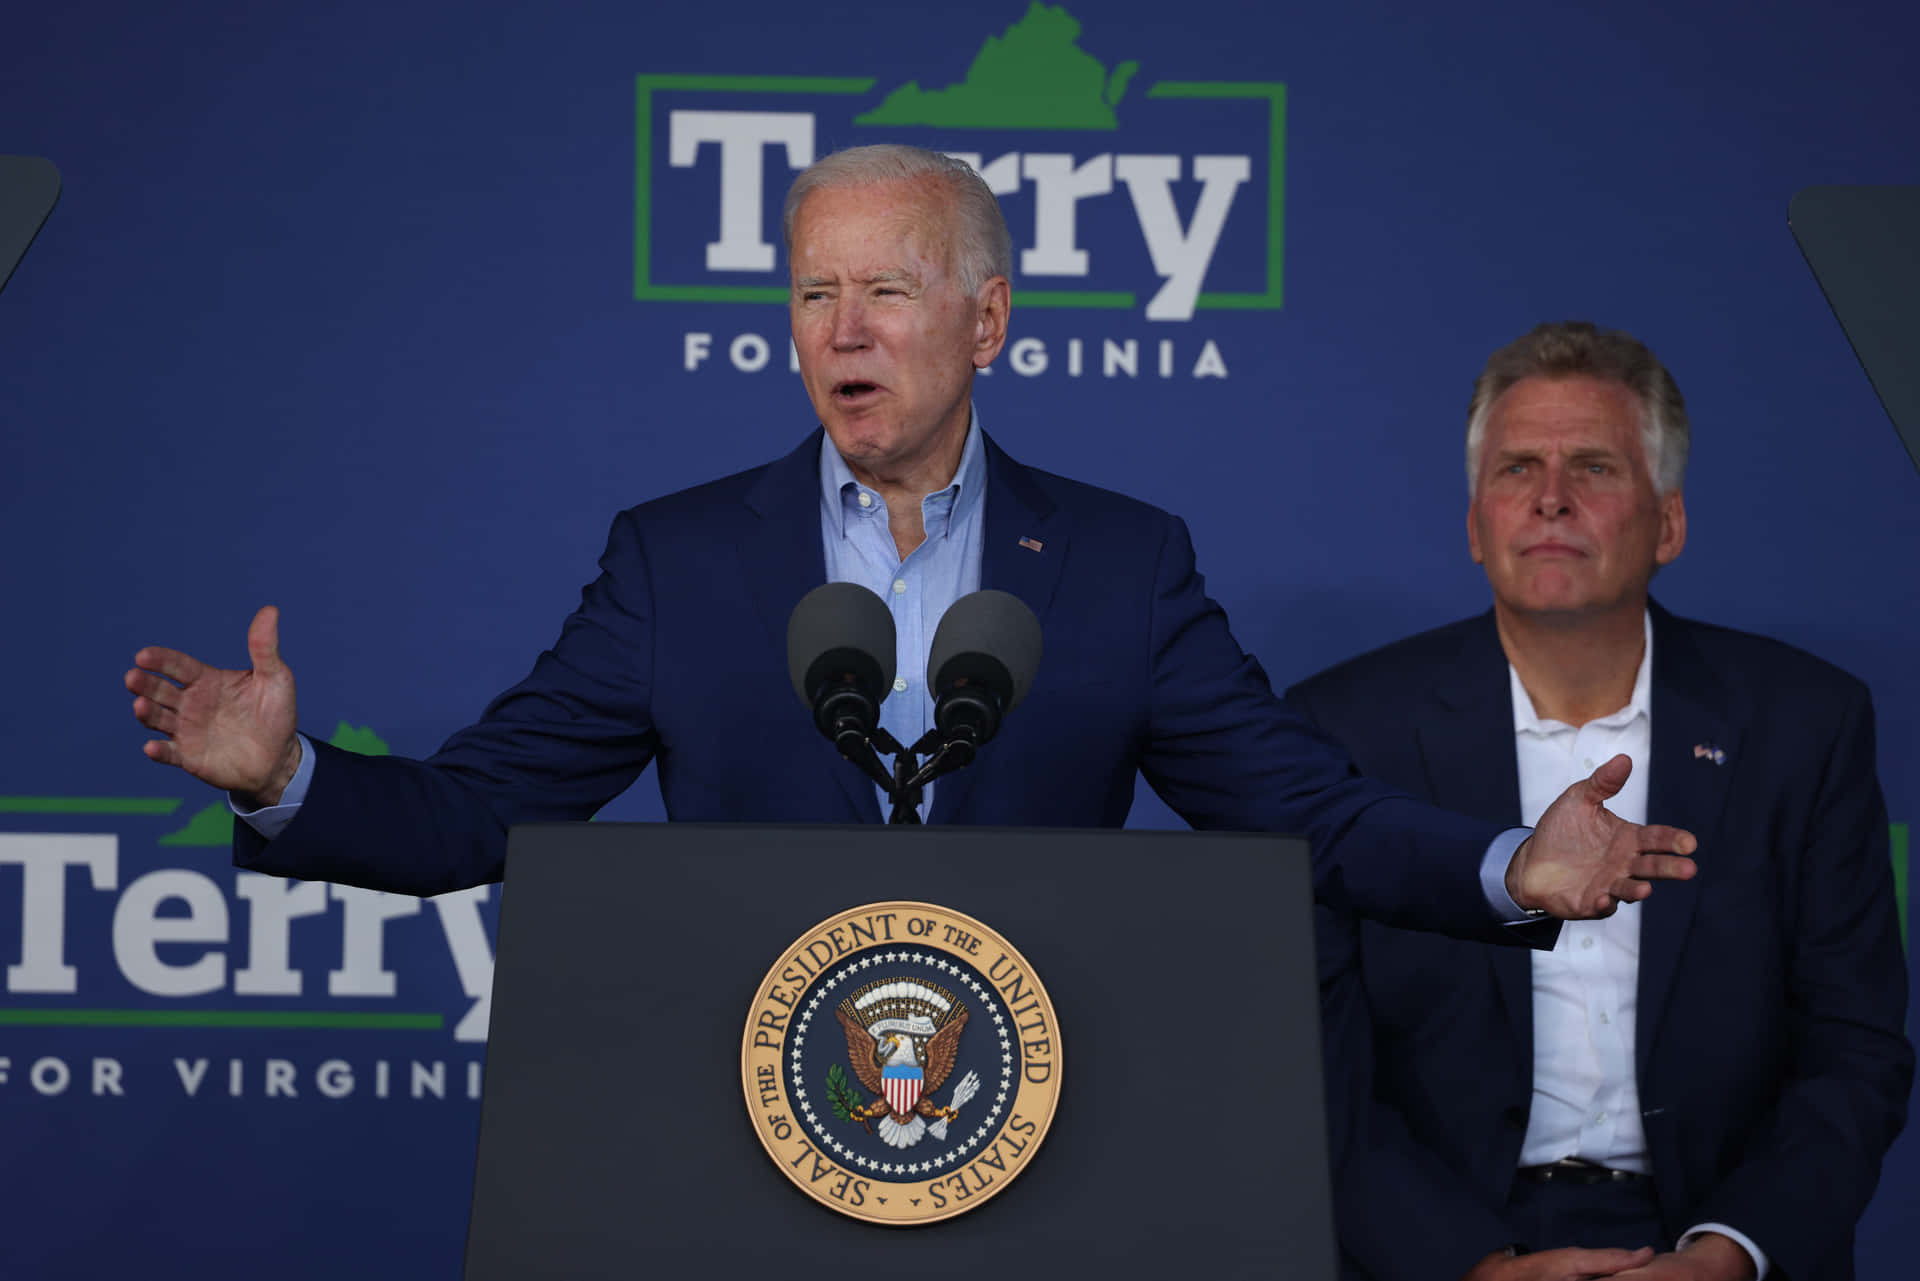 Joe Biden Delivering A Speech With Terry McAuliffe Behind Him Wallpaper